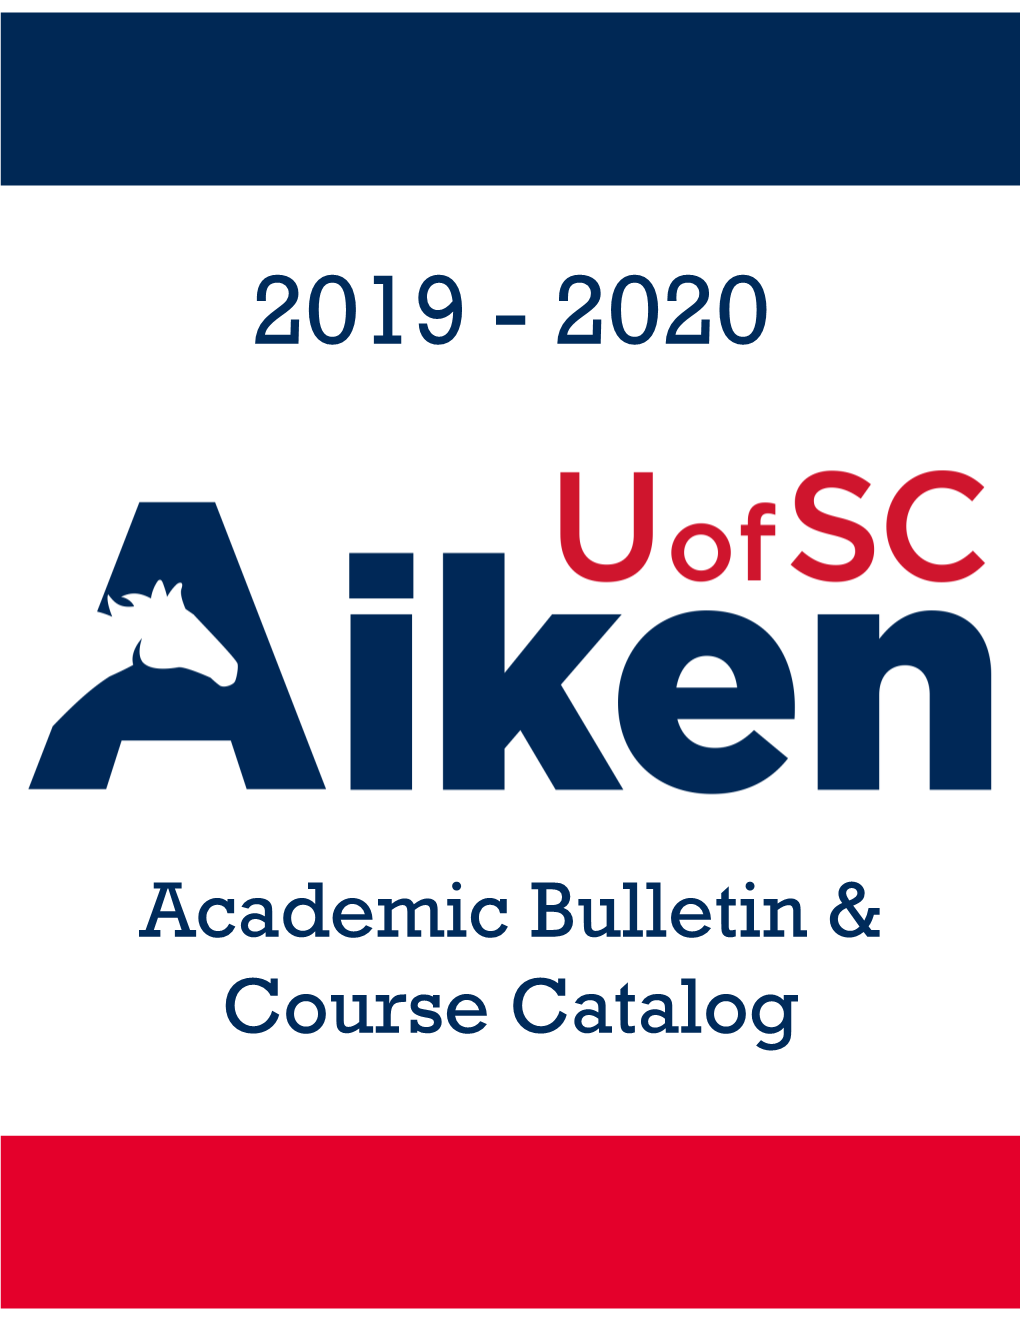 USC Aiken Academic Bulletin